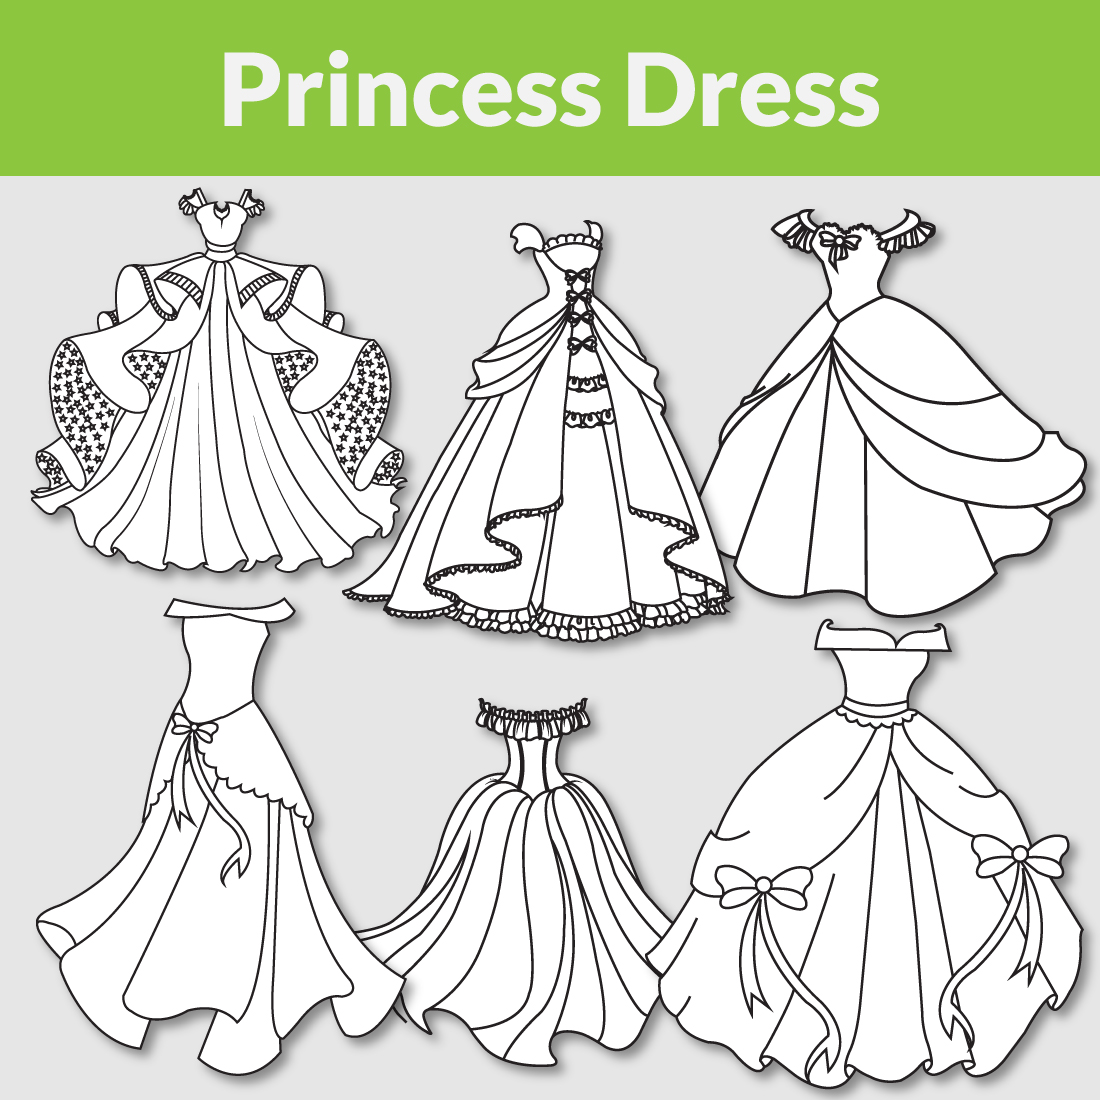 Princess dress set